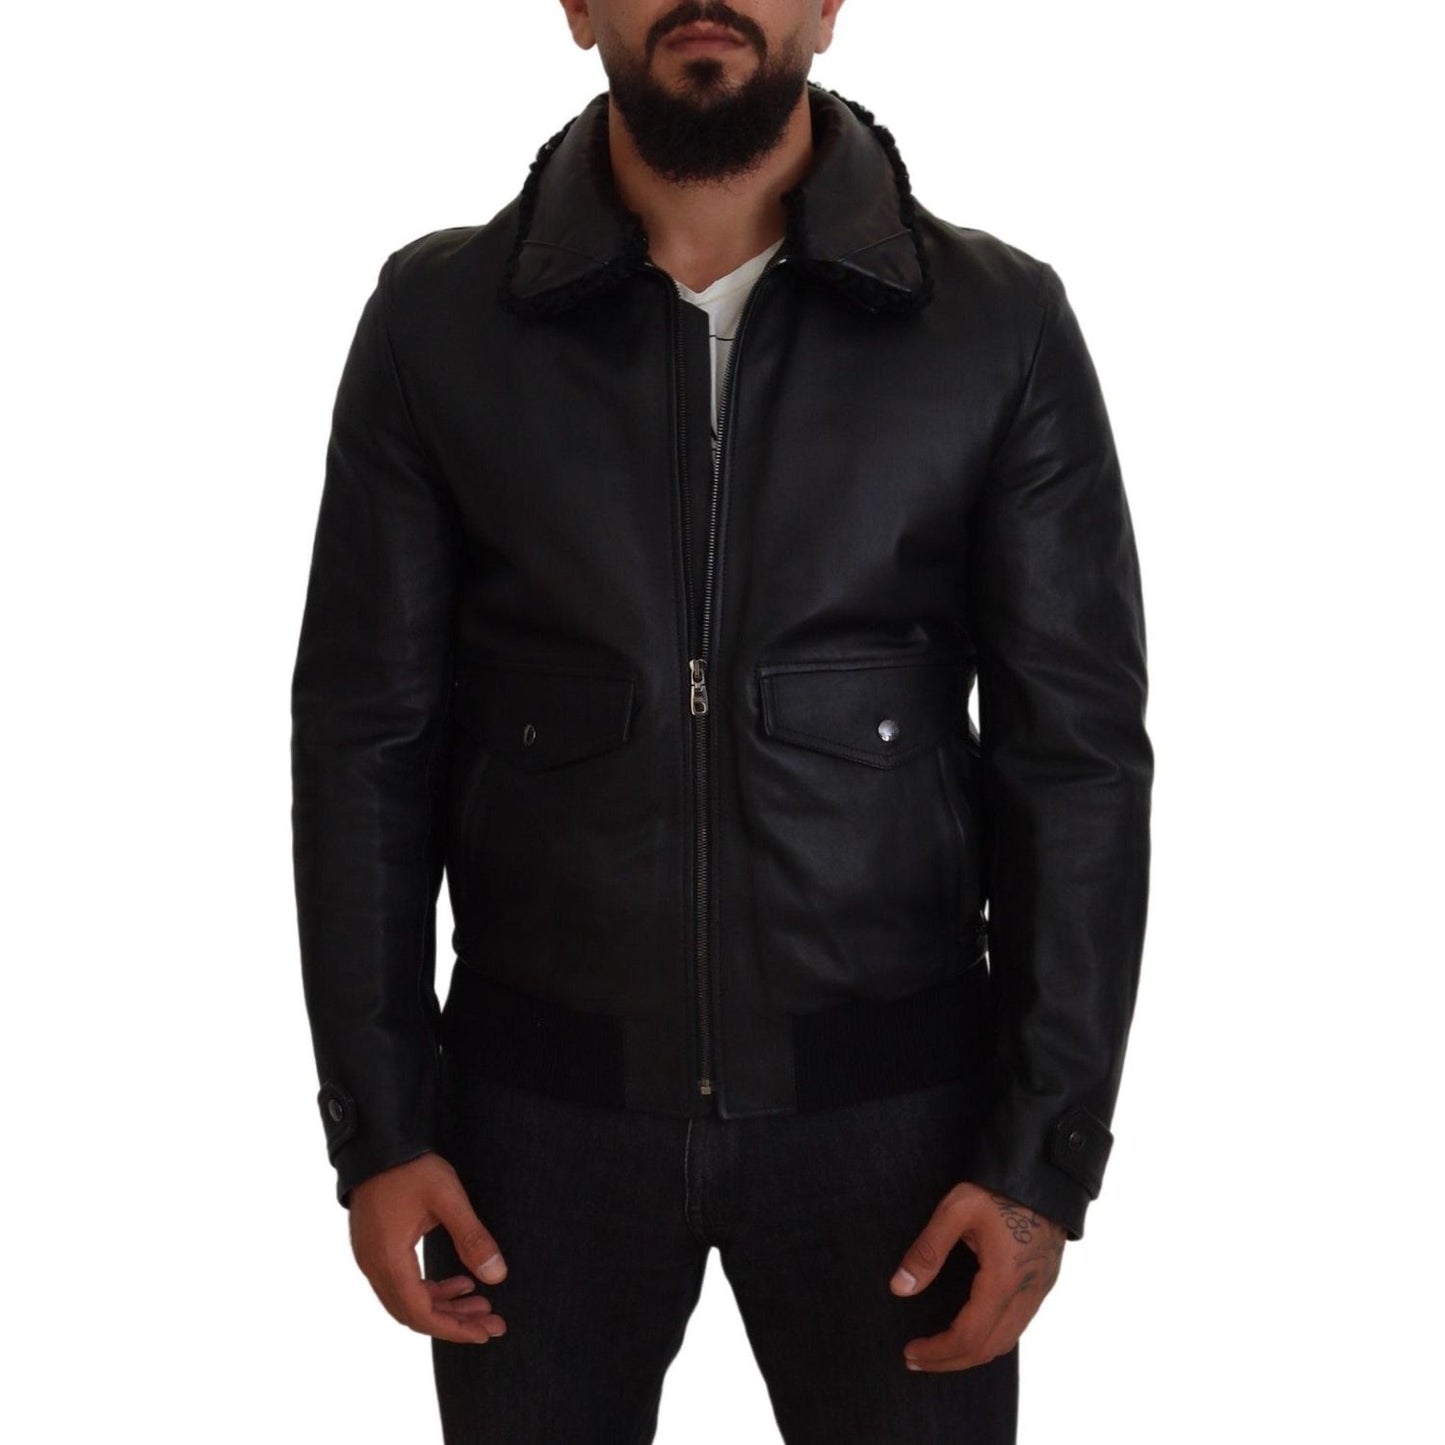 Dolce & Gabbana Chic Black Leather Silk-Lined Jacket black-lamb-leather-collared-men-coat-jacket